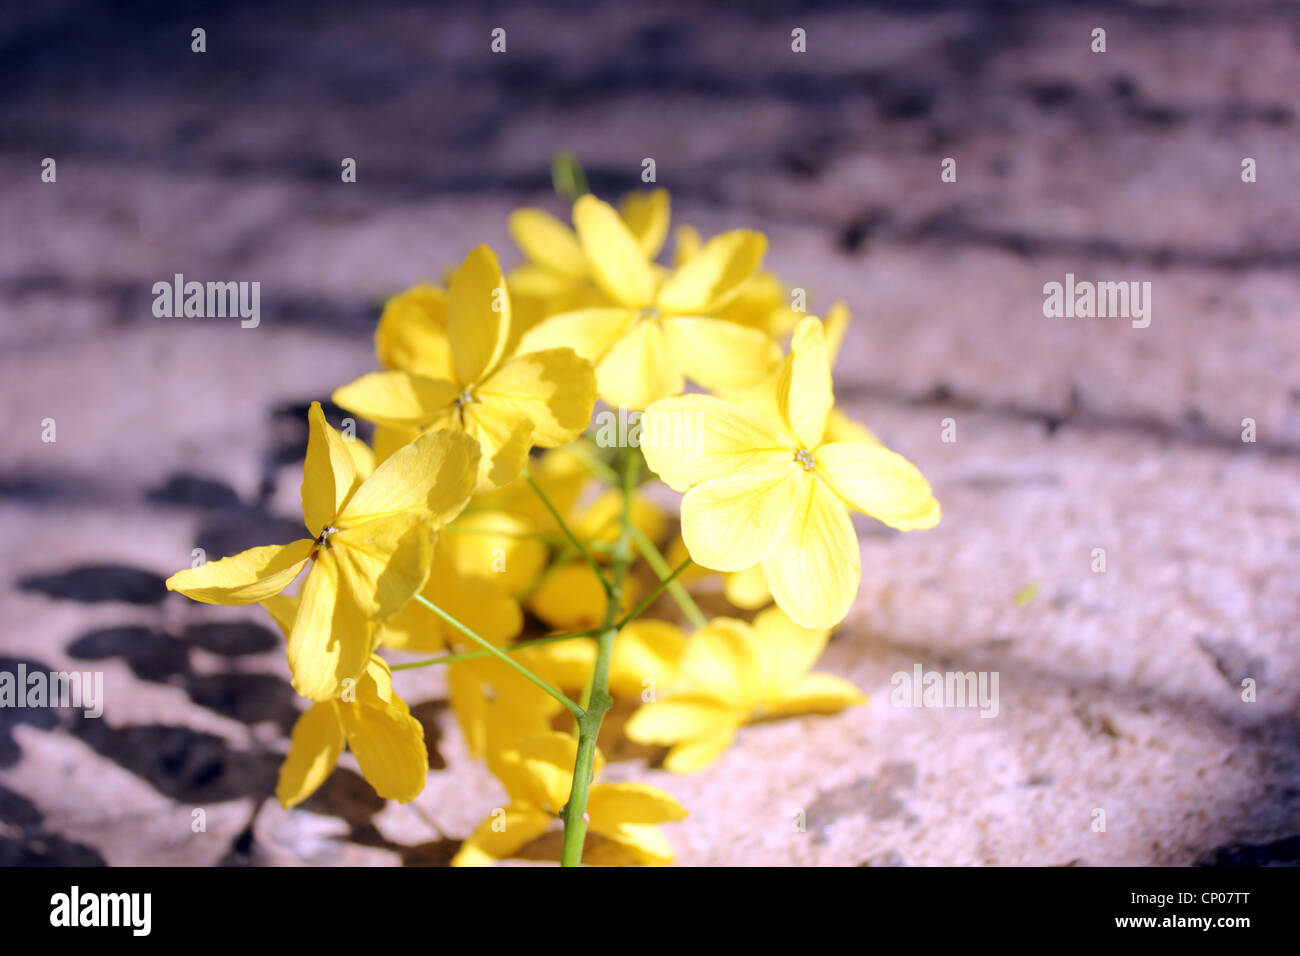 Fiore giallo di cassia fistola o golden shower tree giacente a terra Foto Stock